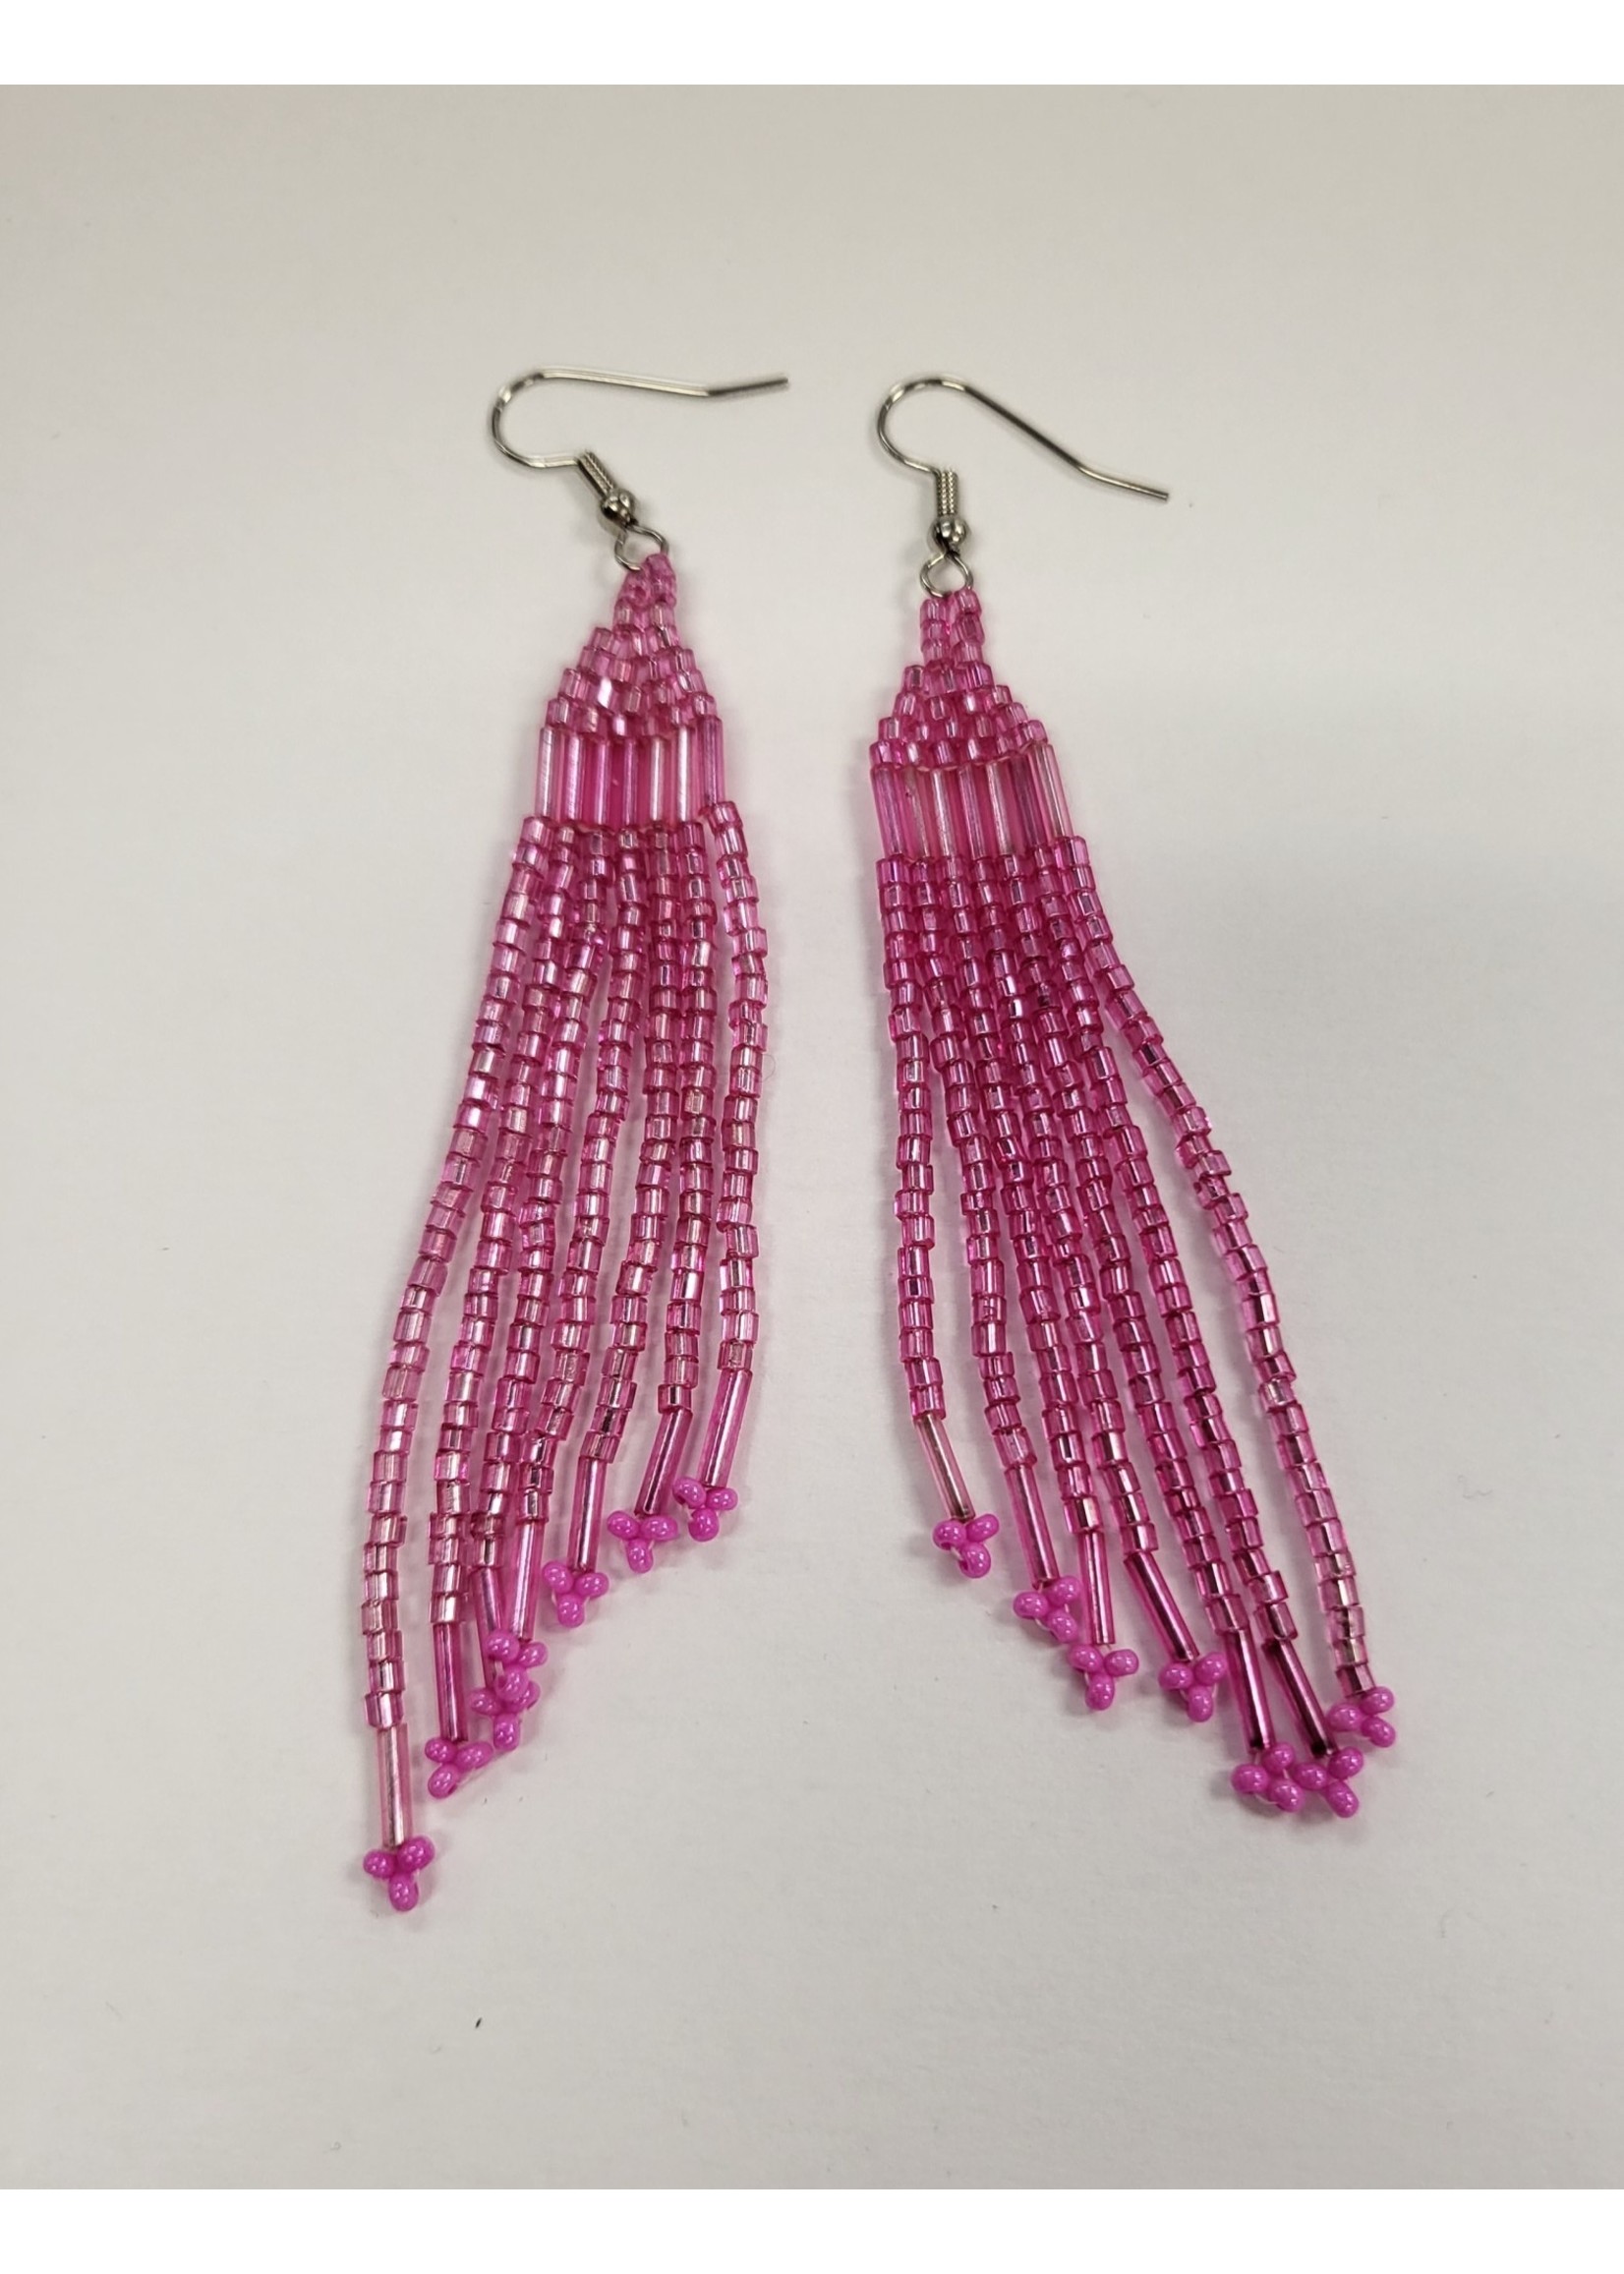 Beaded Earrings Pink Tassel (SOLD)